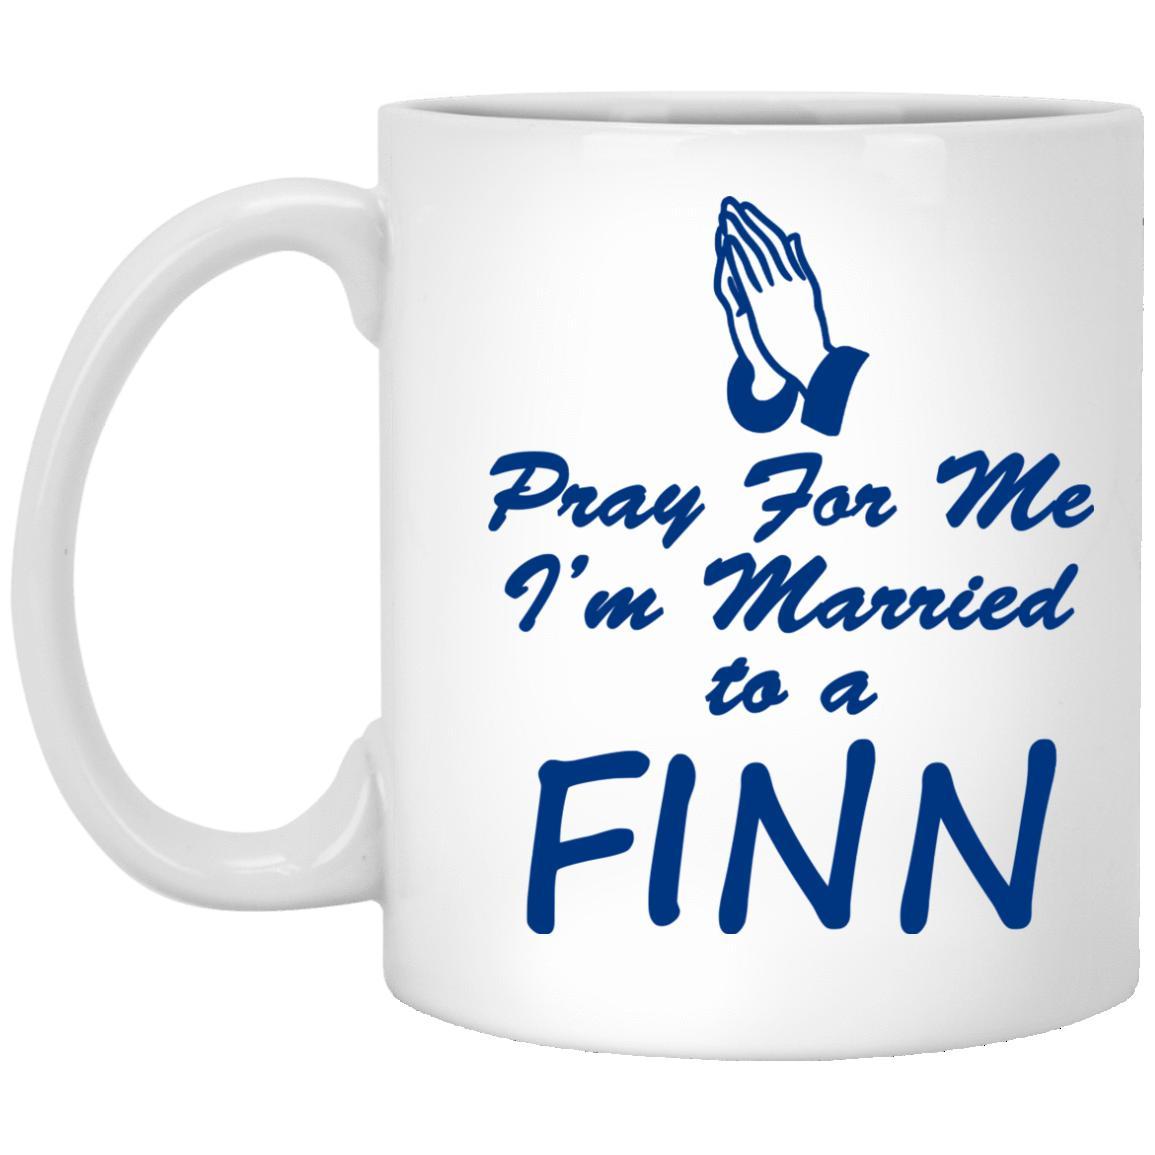 Pray For Finn Finnish Mug Finnish Gift Finnish Husband